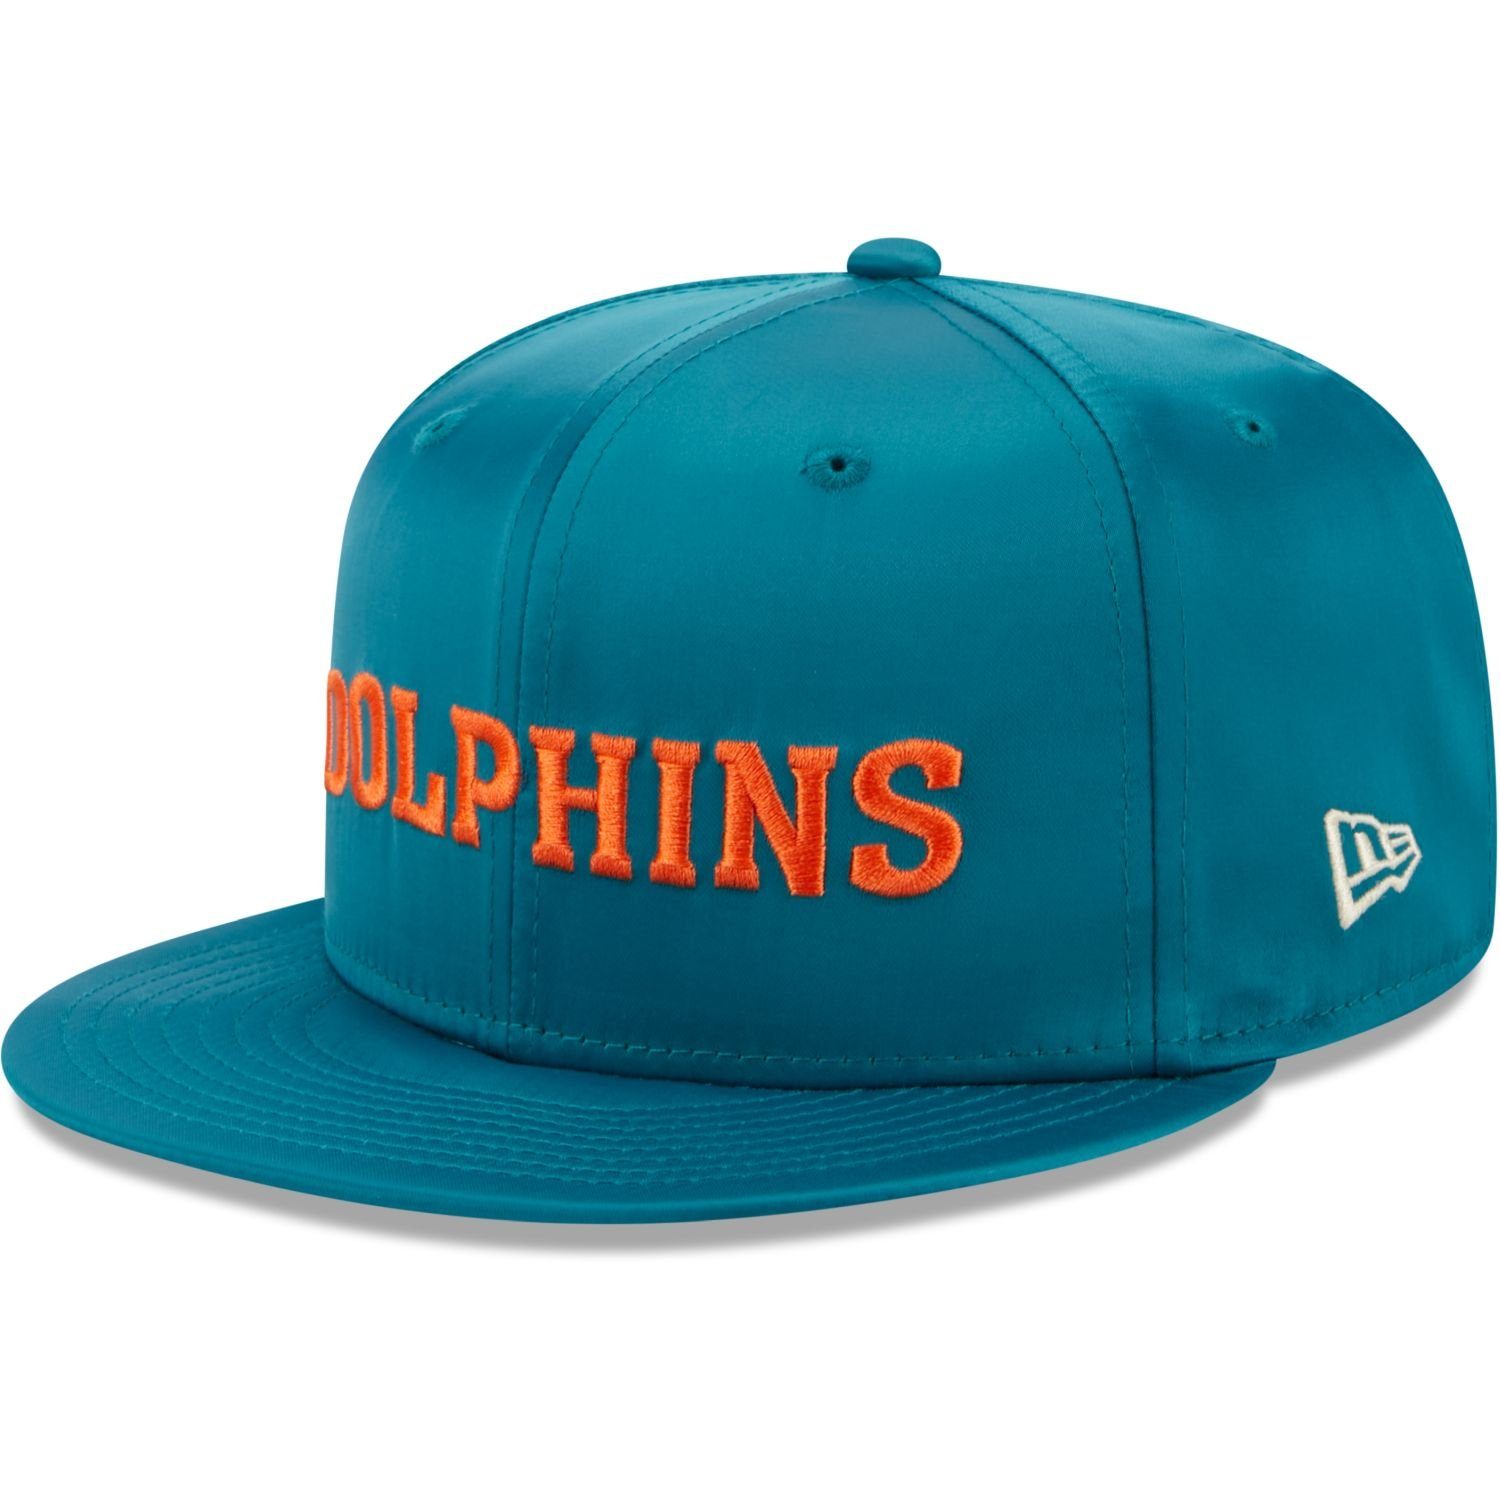 New Cap 9Fifty SCRIPT Snapback Era Dolphins SATIN Miami